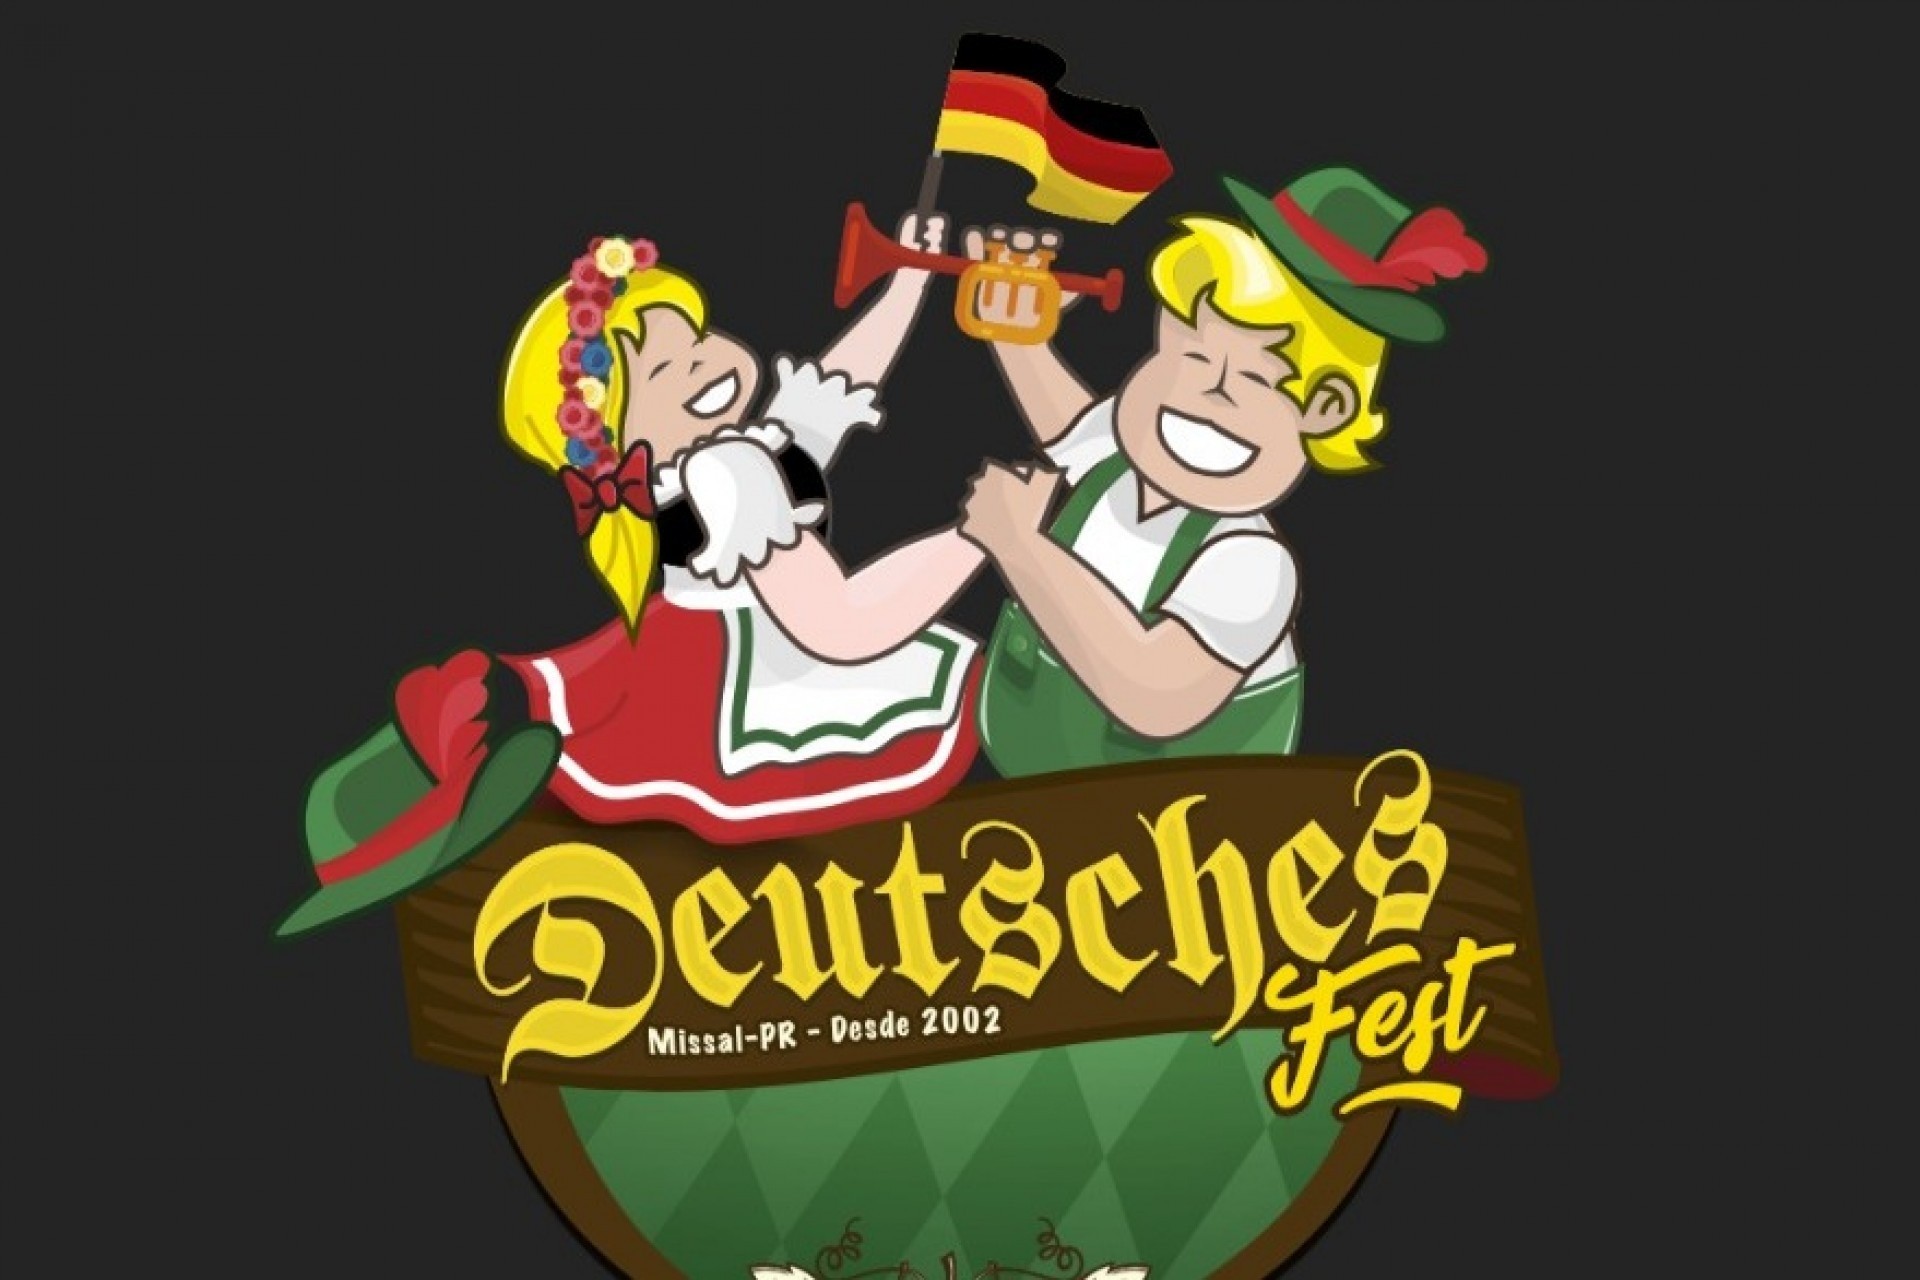 19ª Deutsches Fest vai realizar-se nos dias 09, 10  e 11 de abril de 2021